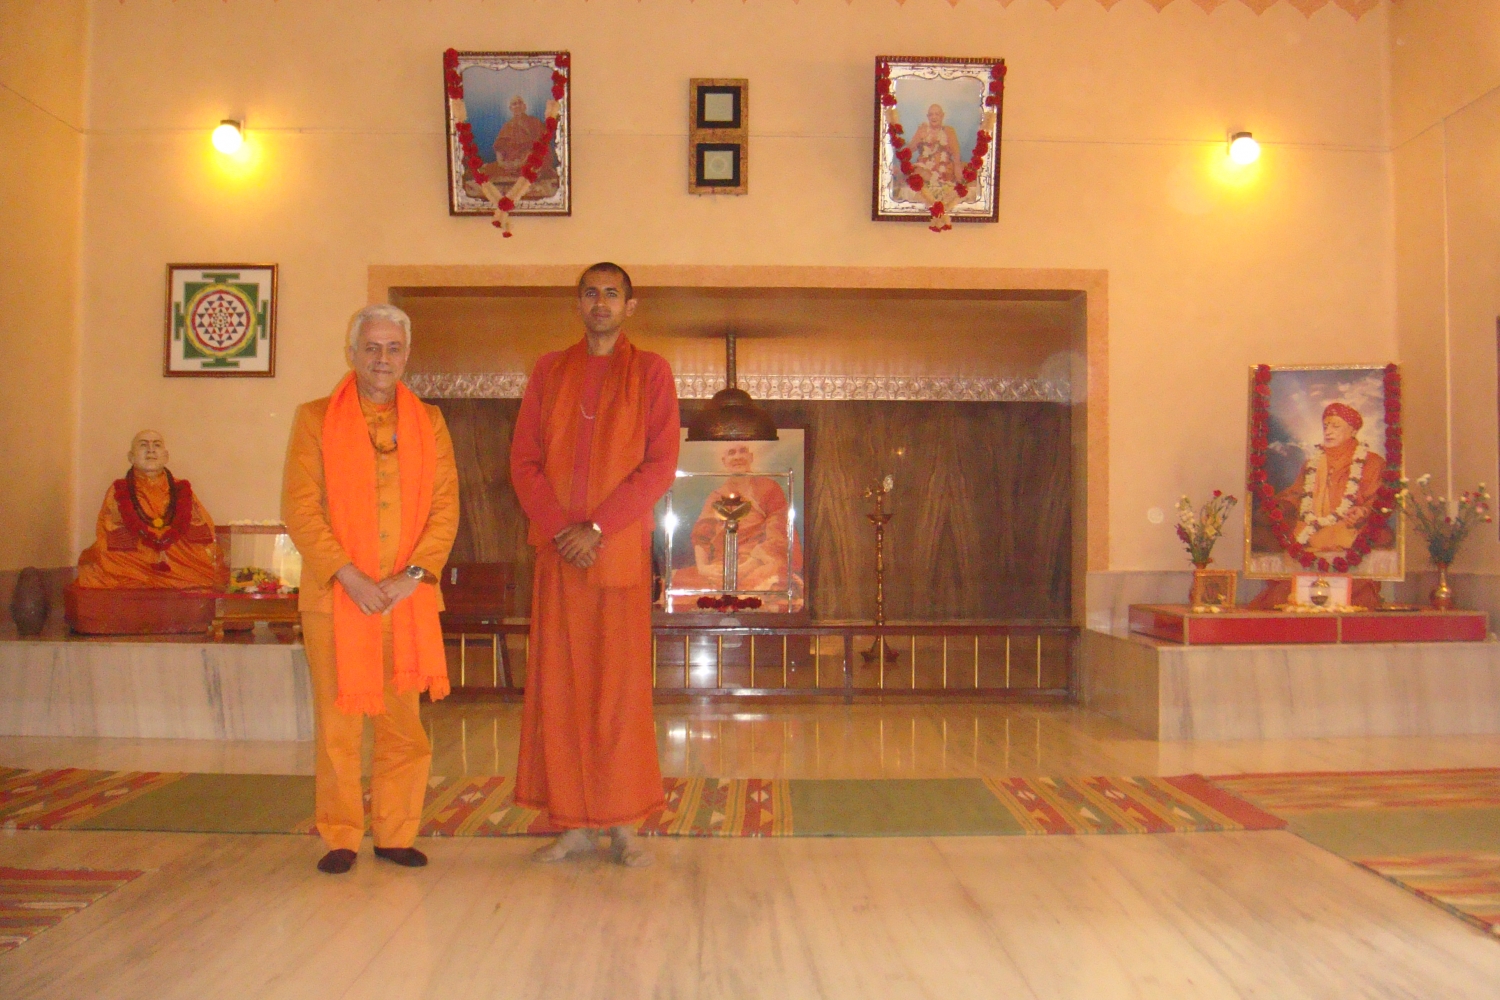 Rencontre de H.H. Jagat Guru Amrta Súryánanda Mahá Rája avec Svāmin Sūryaprakash - Bihar School of Yoga, Munger, Inde - 2010, Janvier